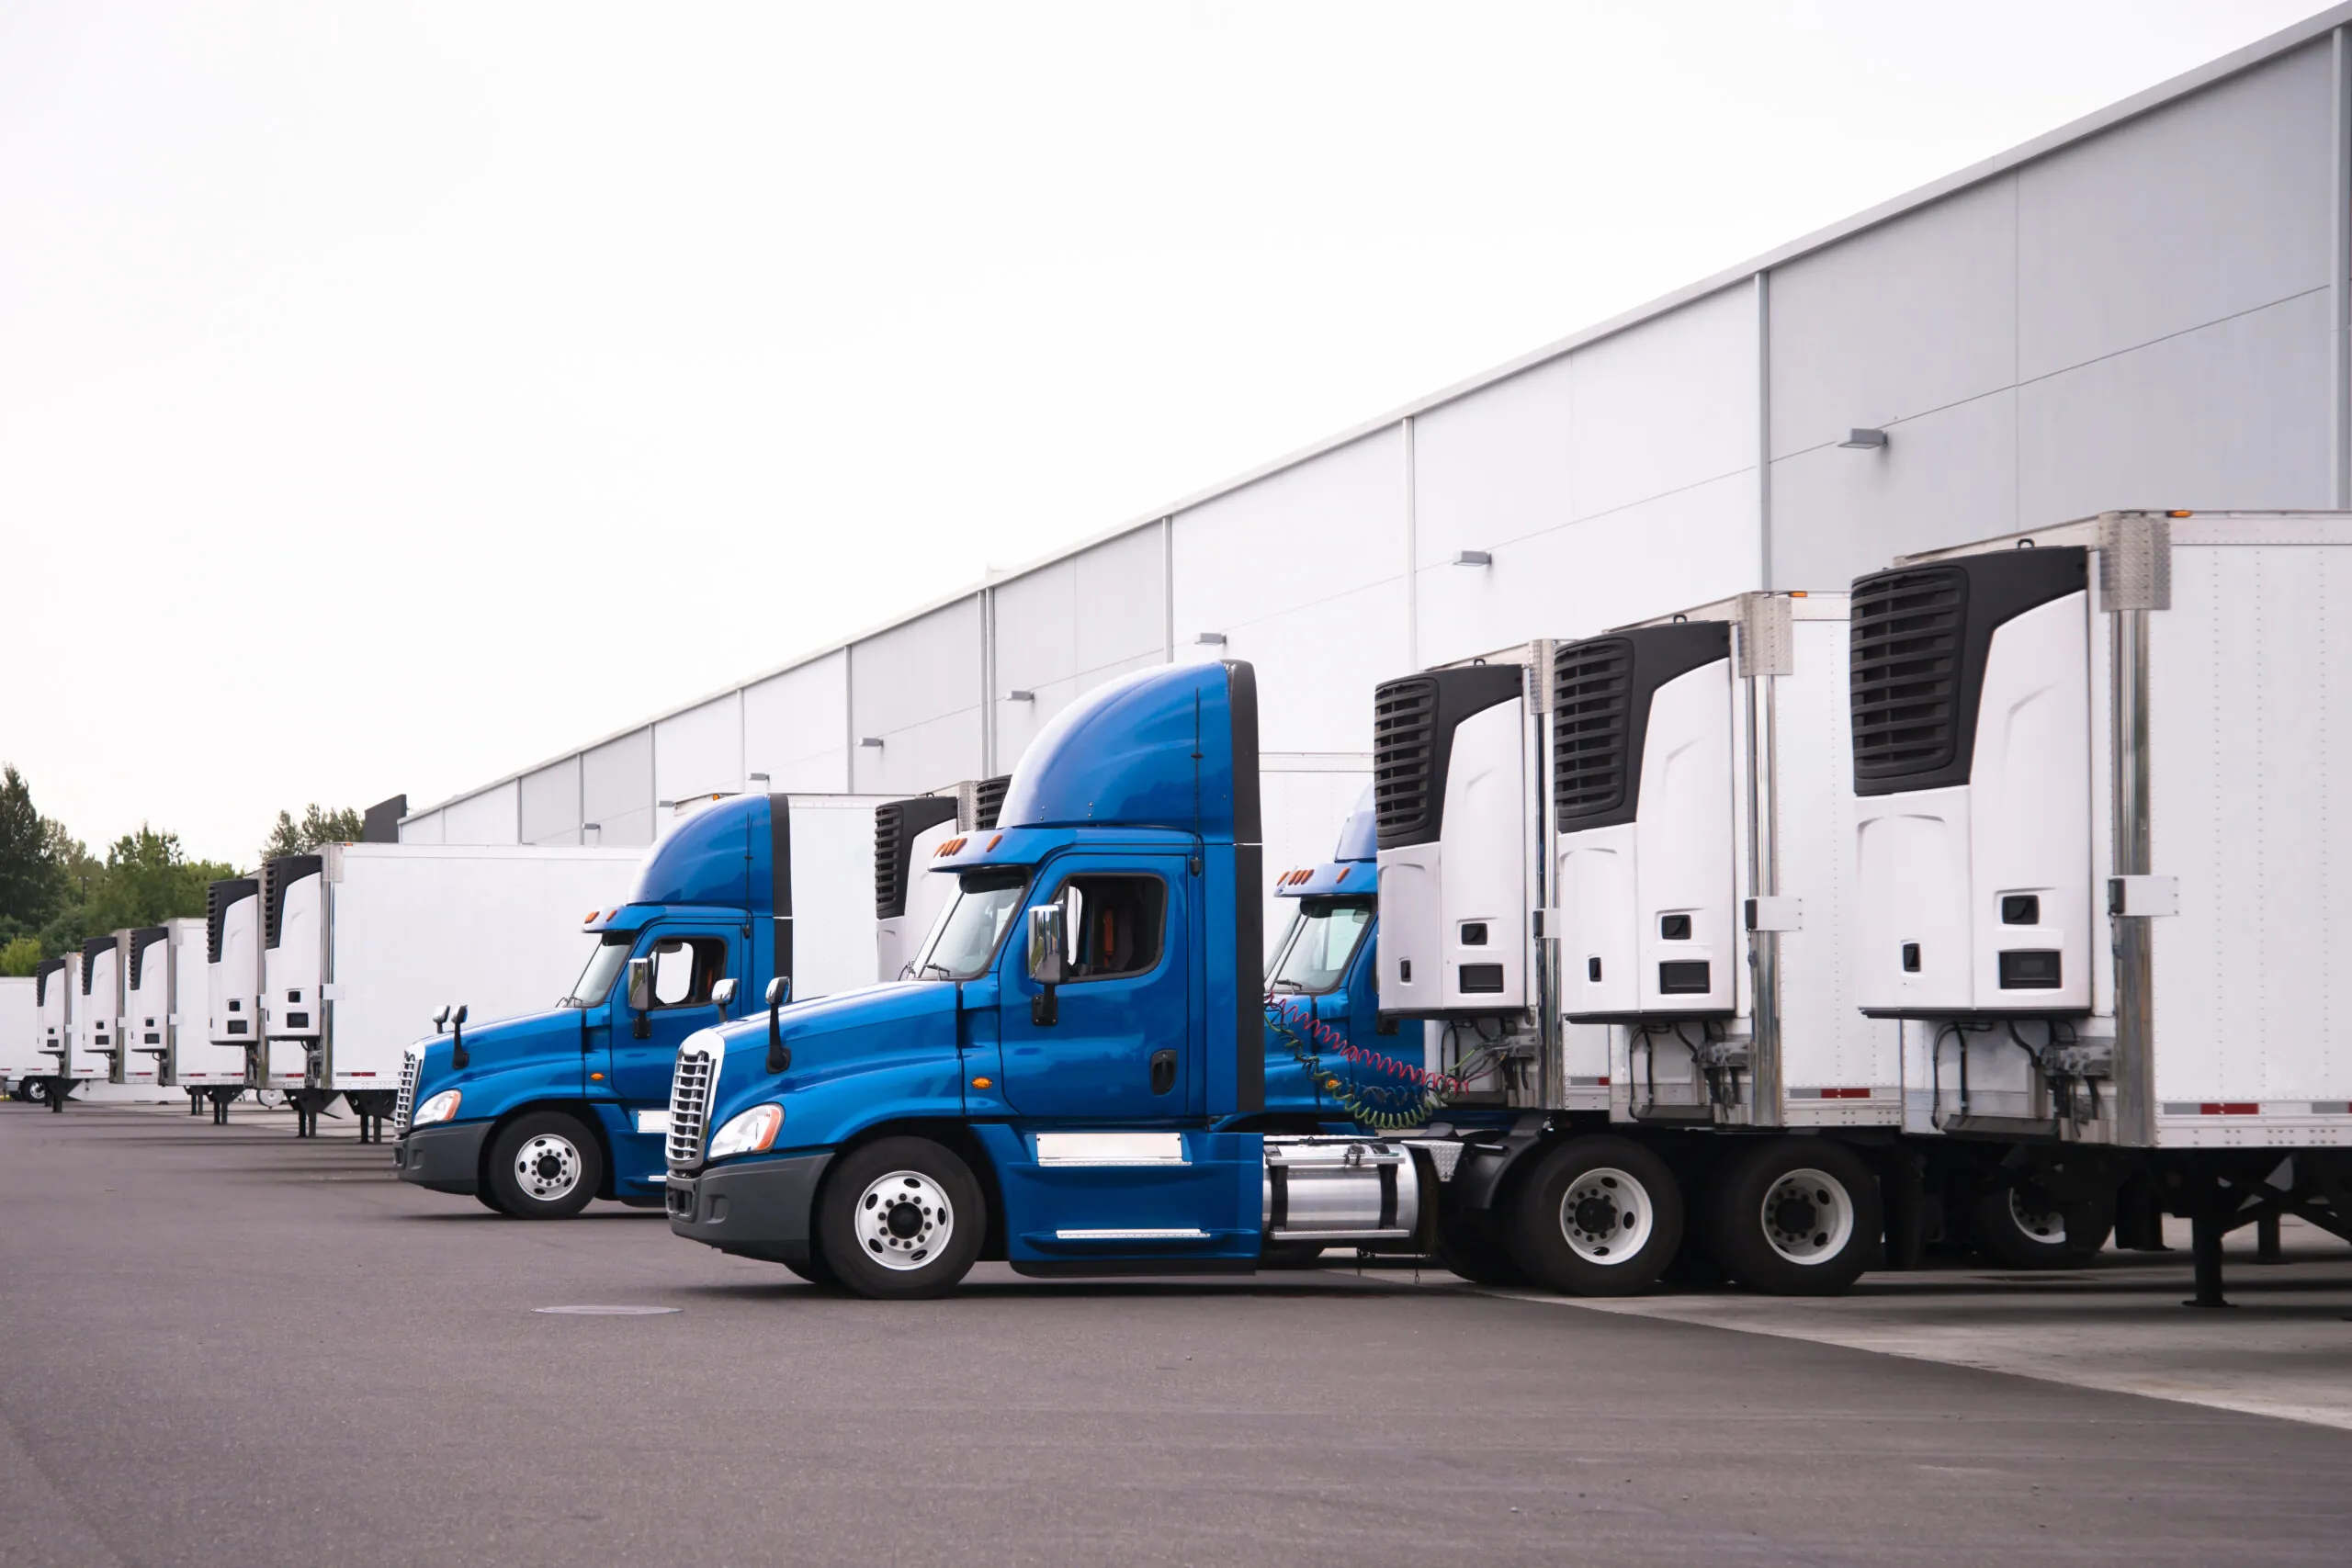 Blue semi trucks and semi trailers stand in row